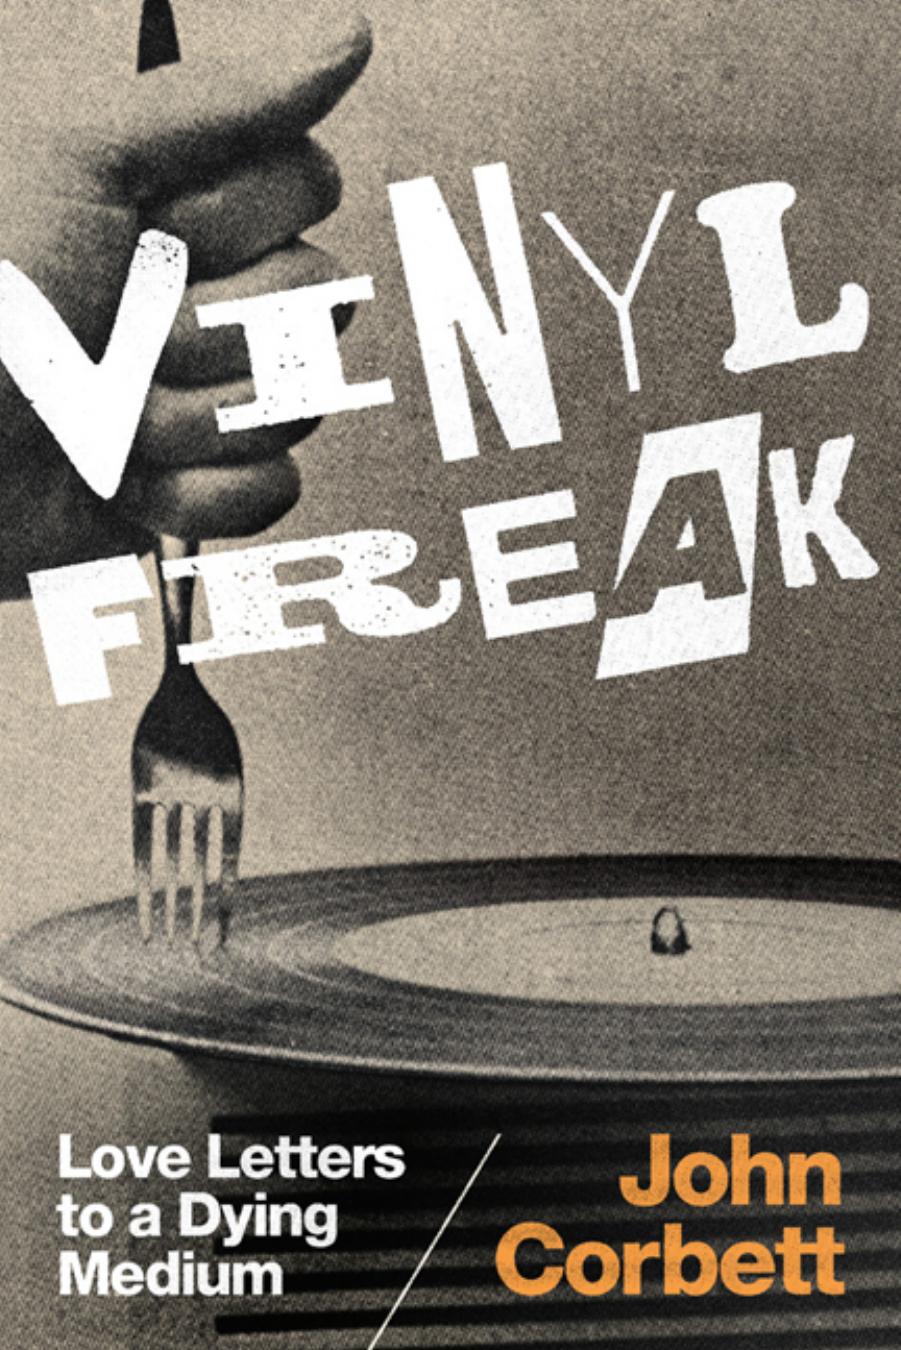 Vinyl Freak: Love Letters to a Dying Medium by John Corbett